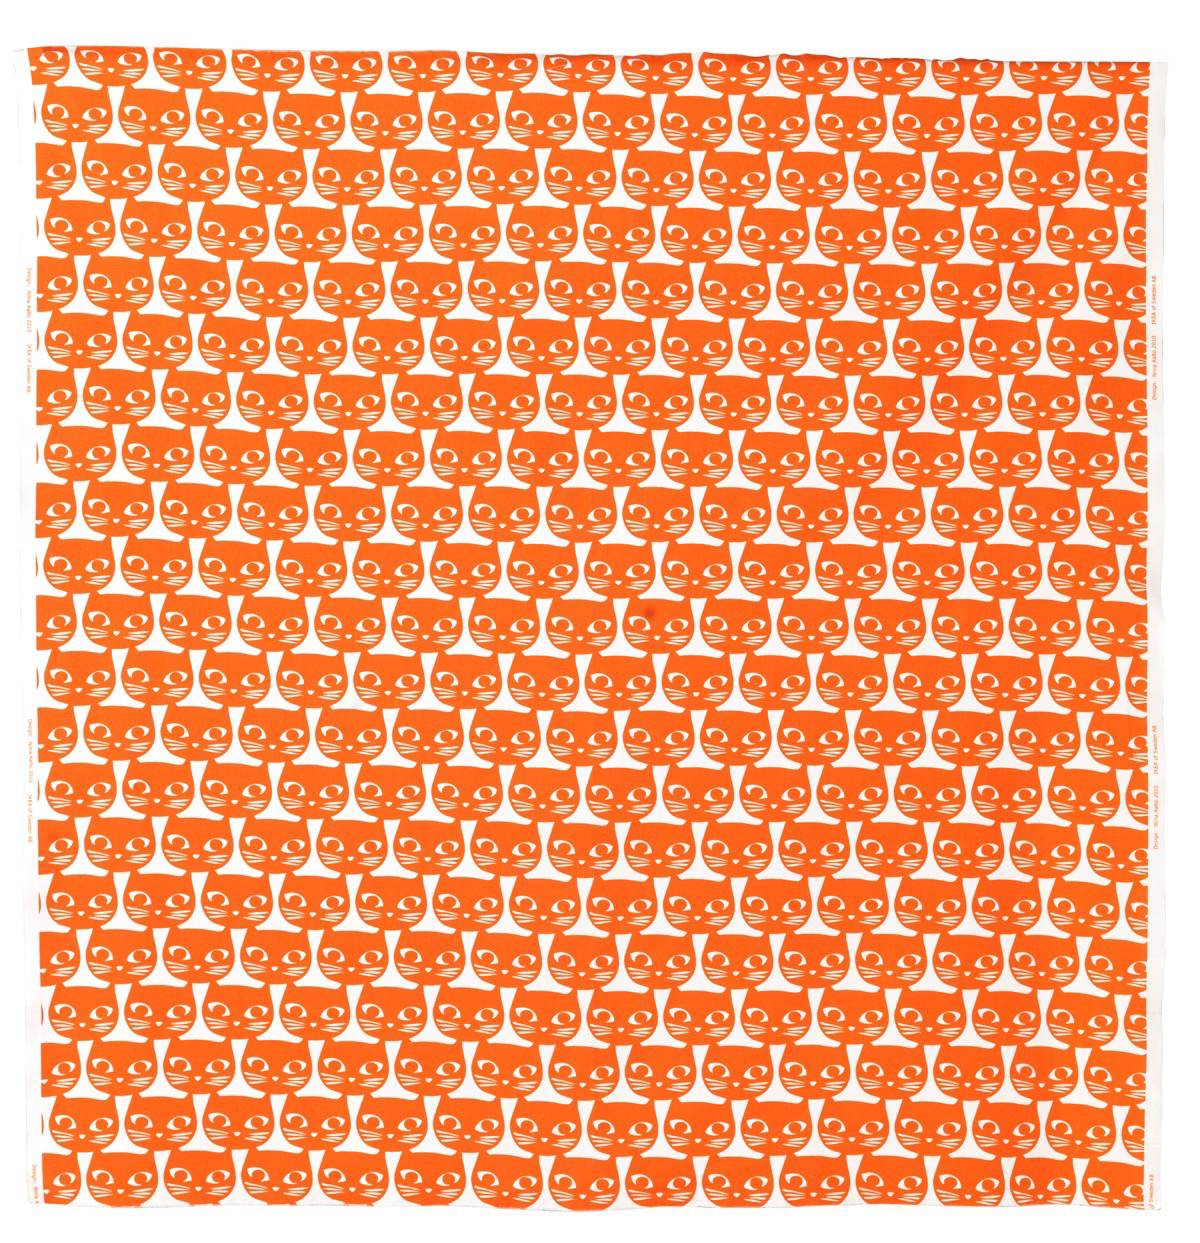 ikea abril 2016 PE576251 mattram tela metro ancho 150 cm algodon naranja.